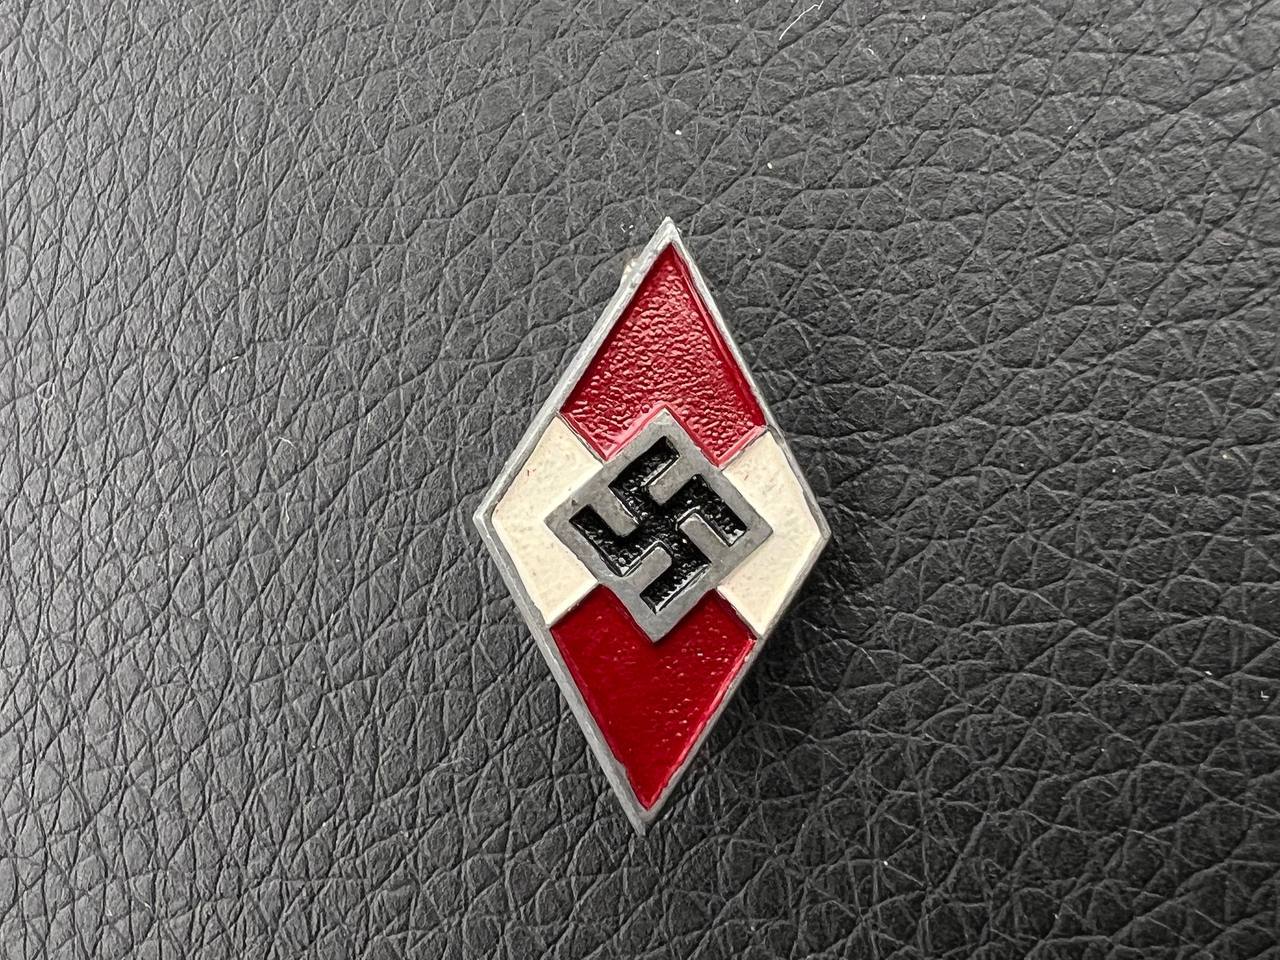 Членский знак Гитлерюгенд. Цинк. От Алексея С.